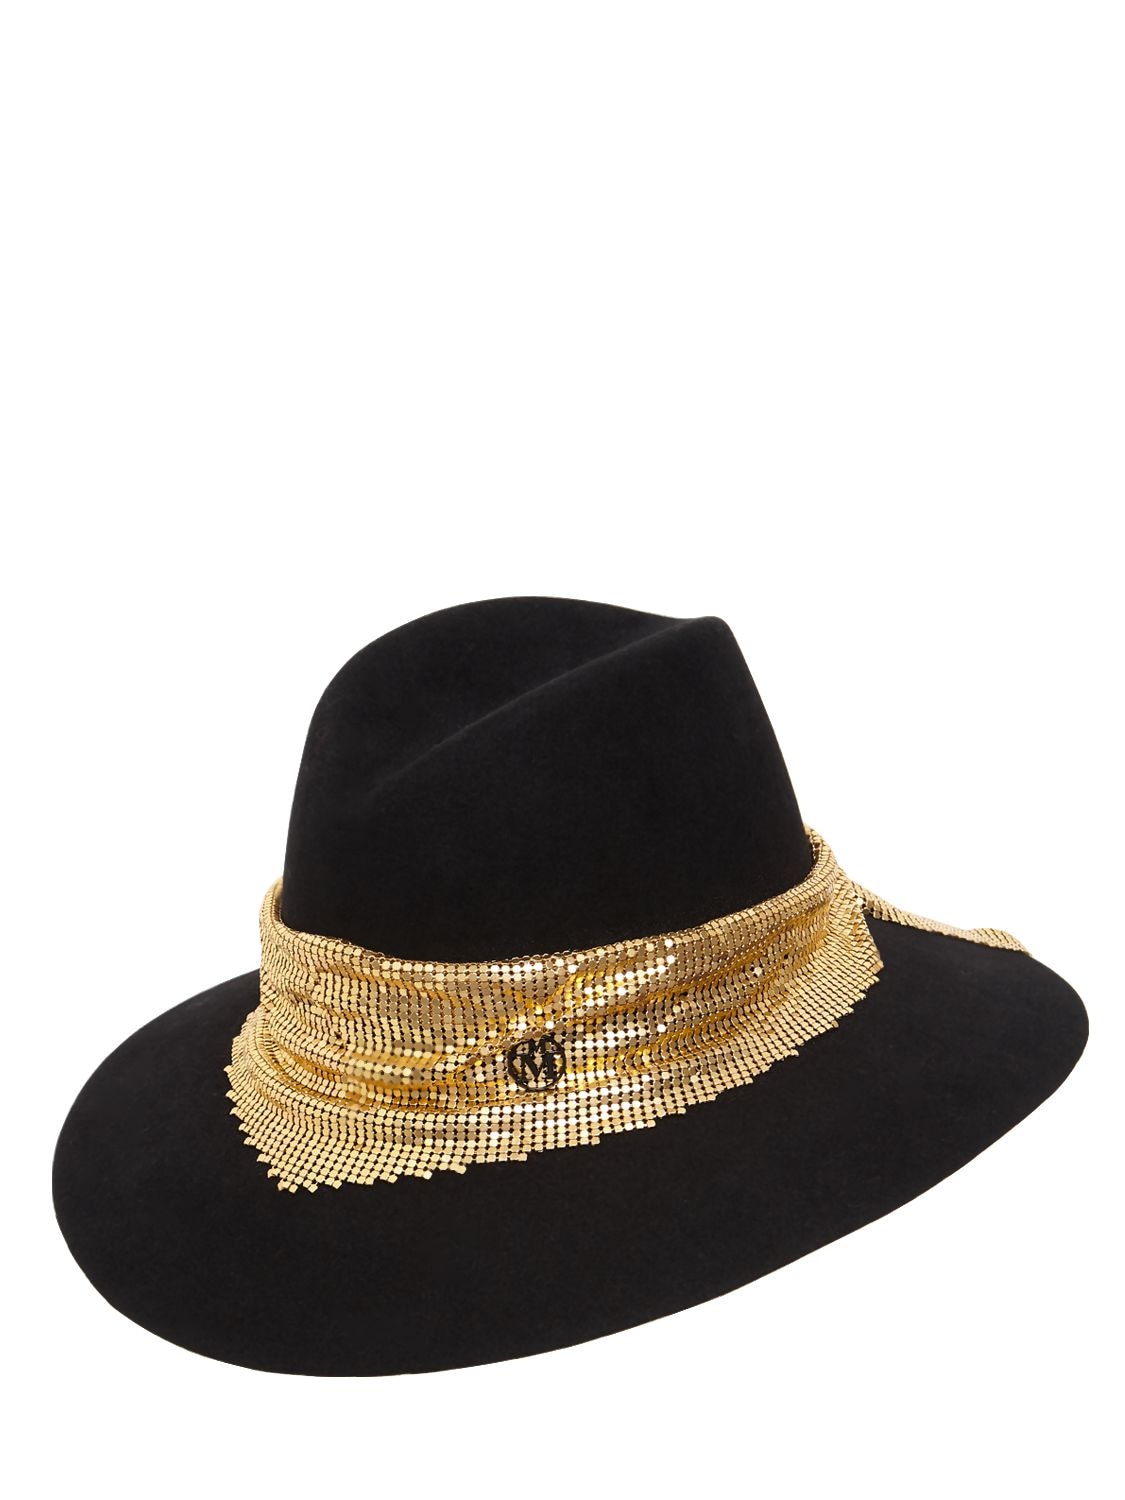 Maison Michel Kate Felt Hat W/ Chain Mesh In Black